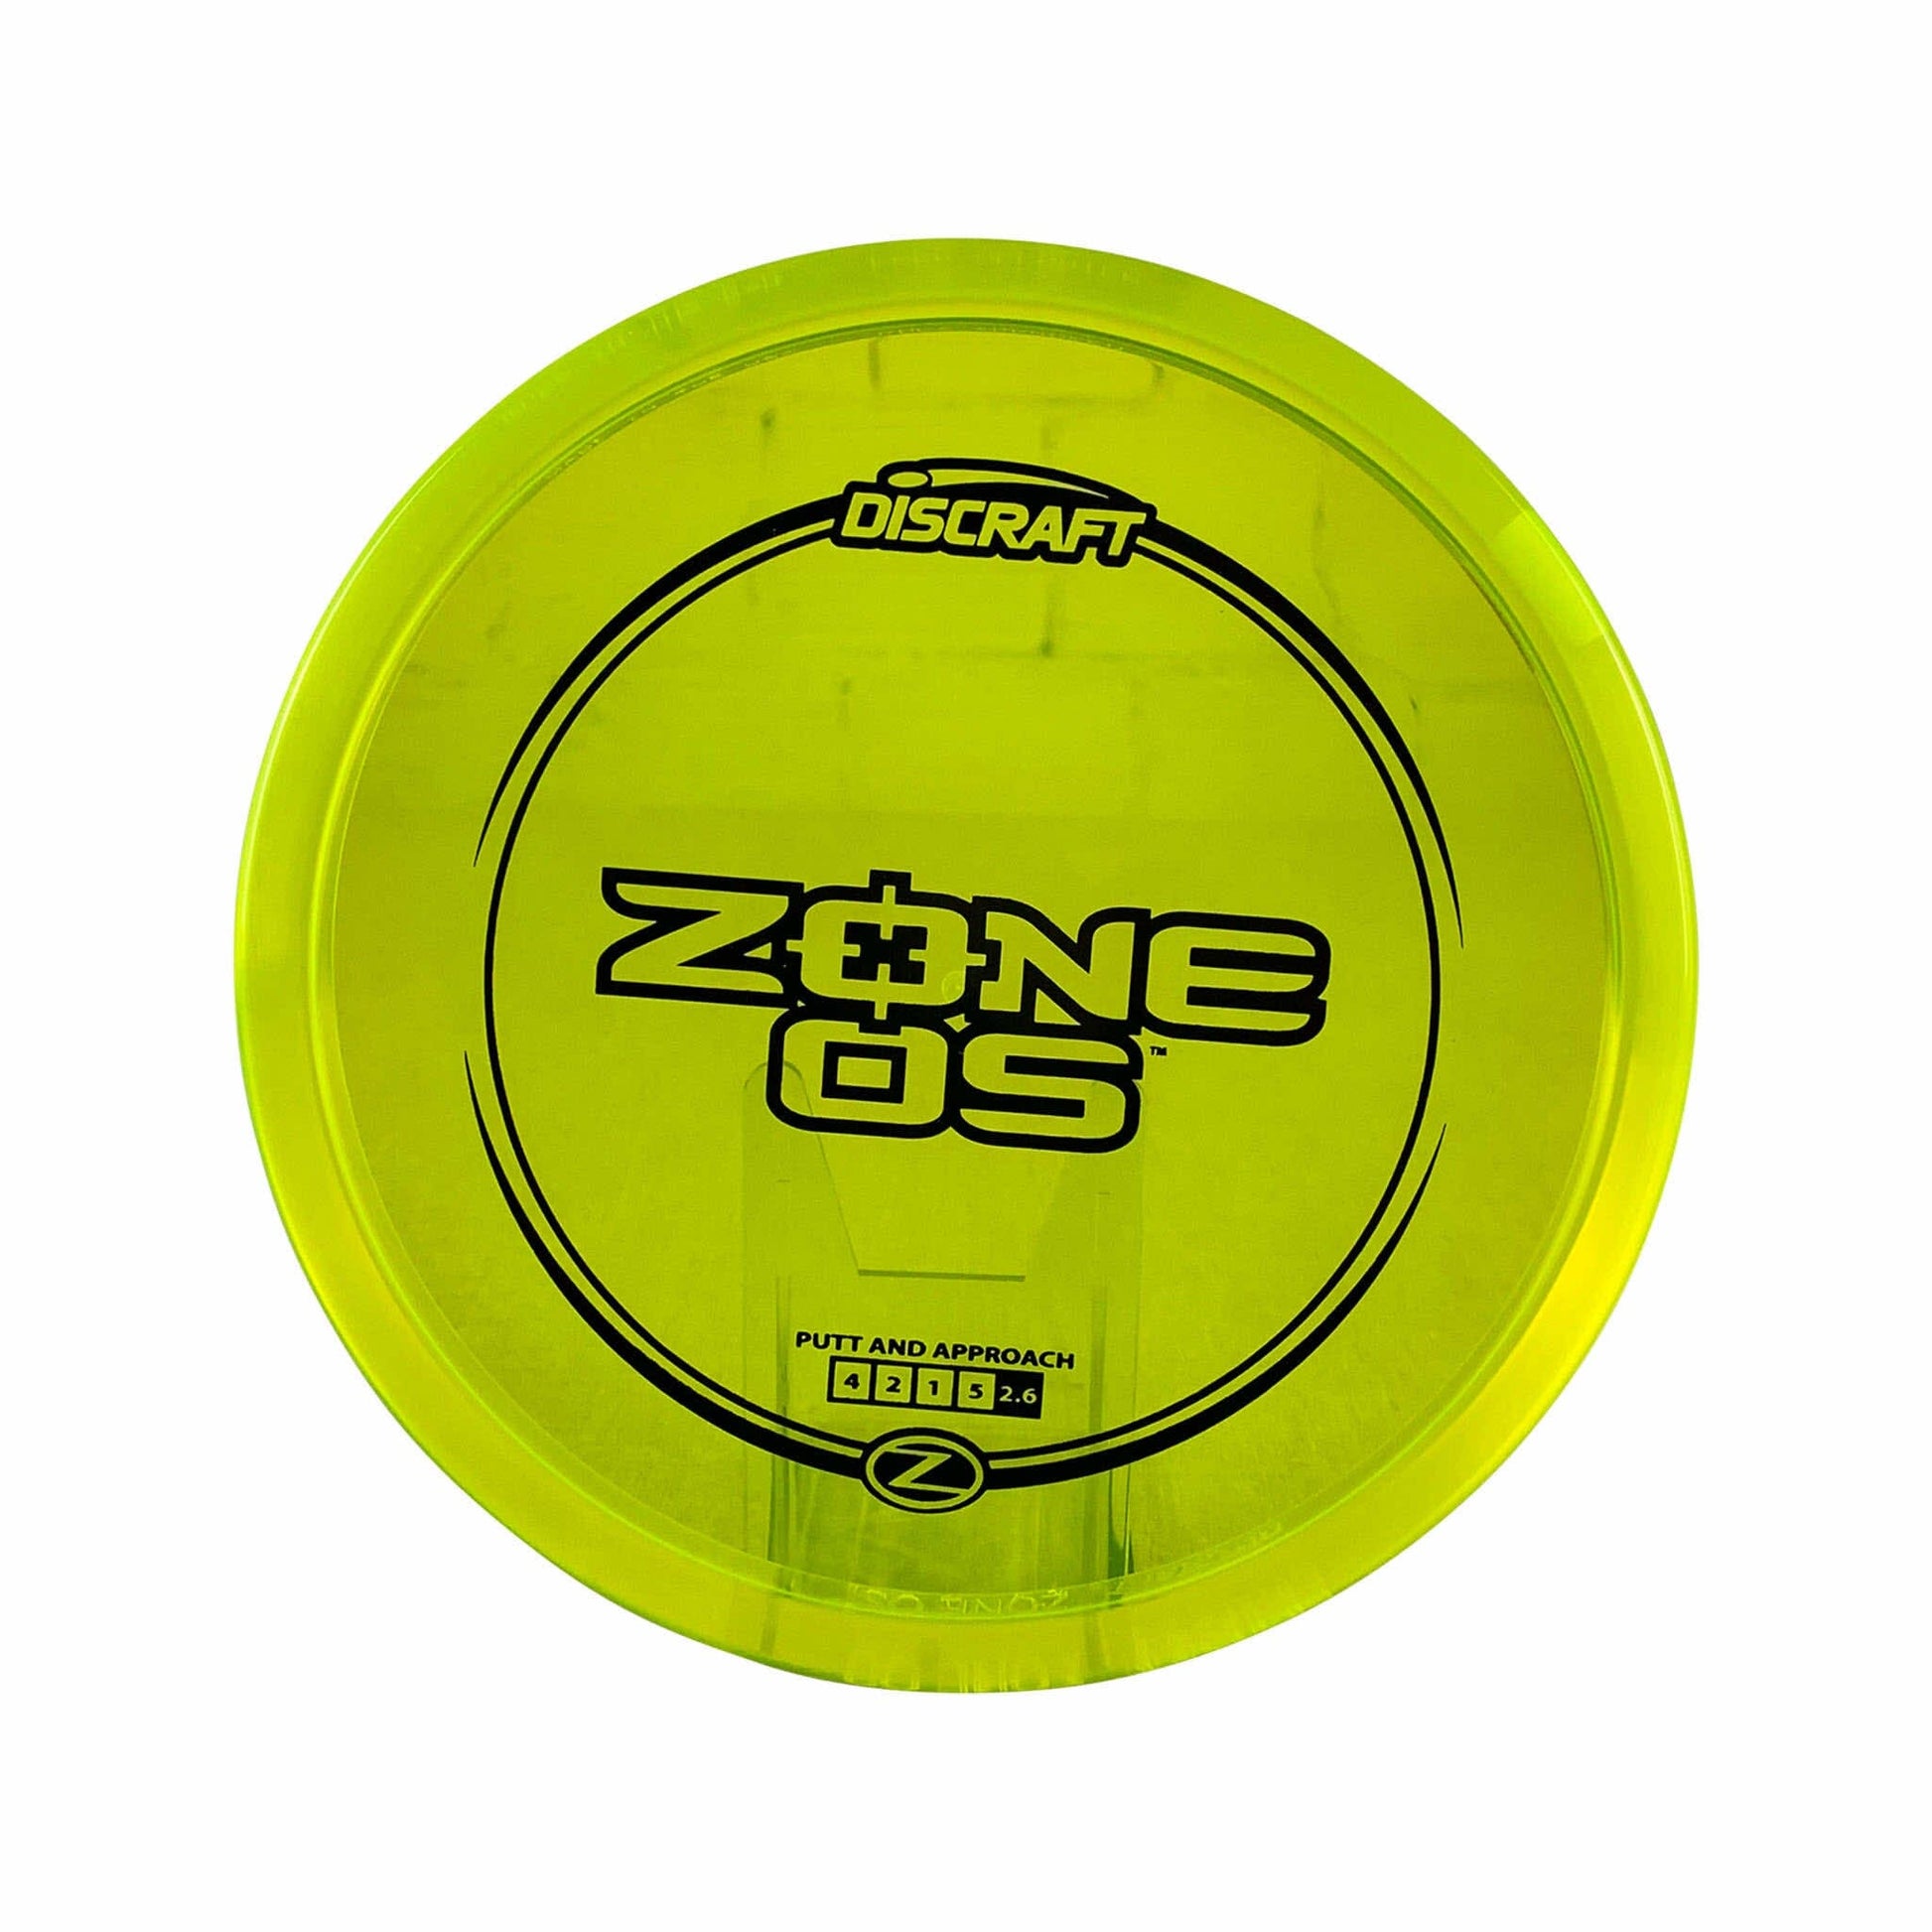 Z Zone OS Disc Discraft yellow 173 